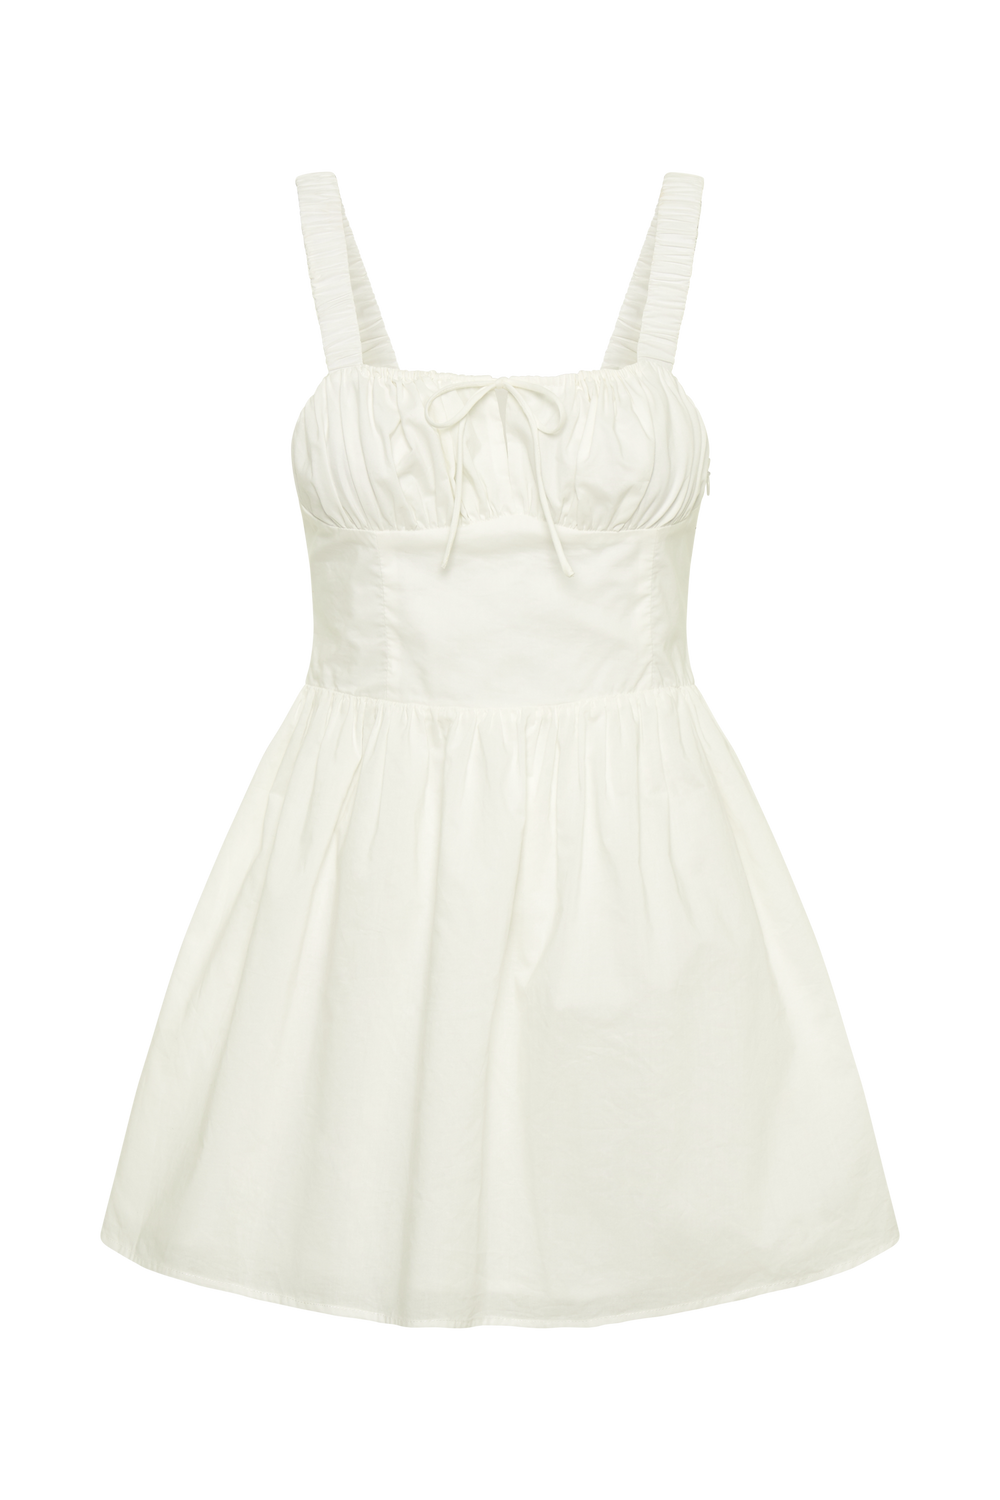 Roz Cotton Mini Dress - White